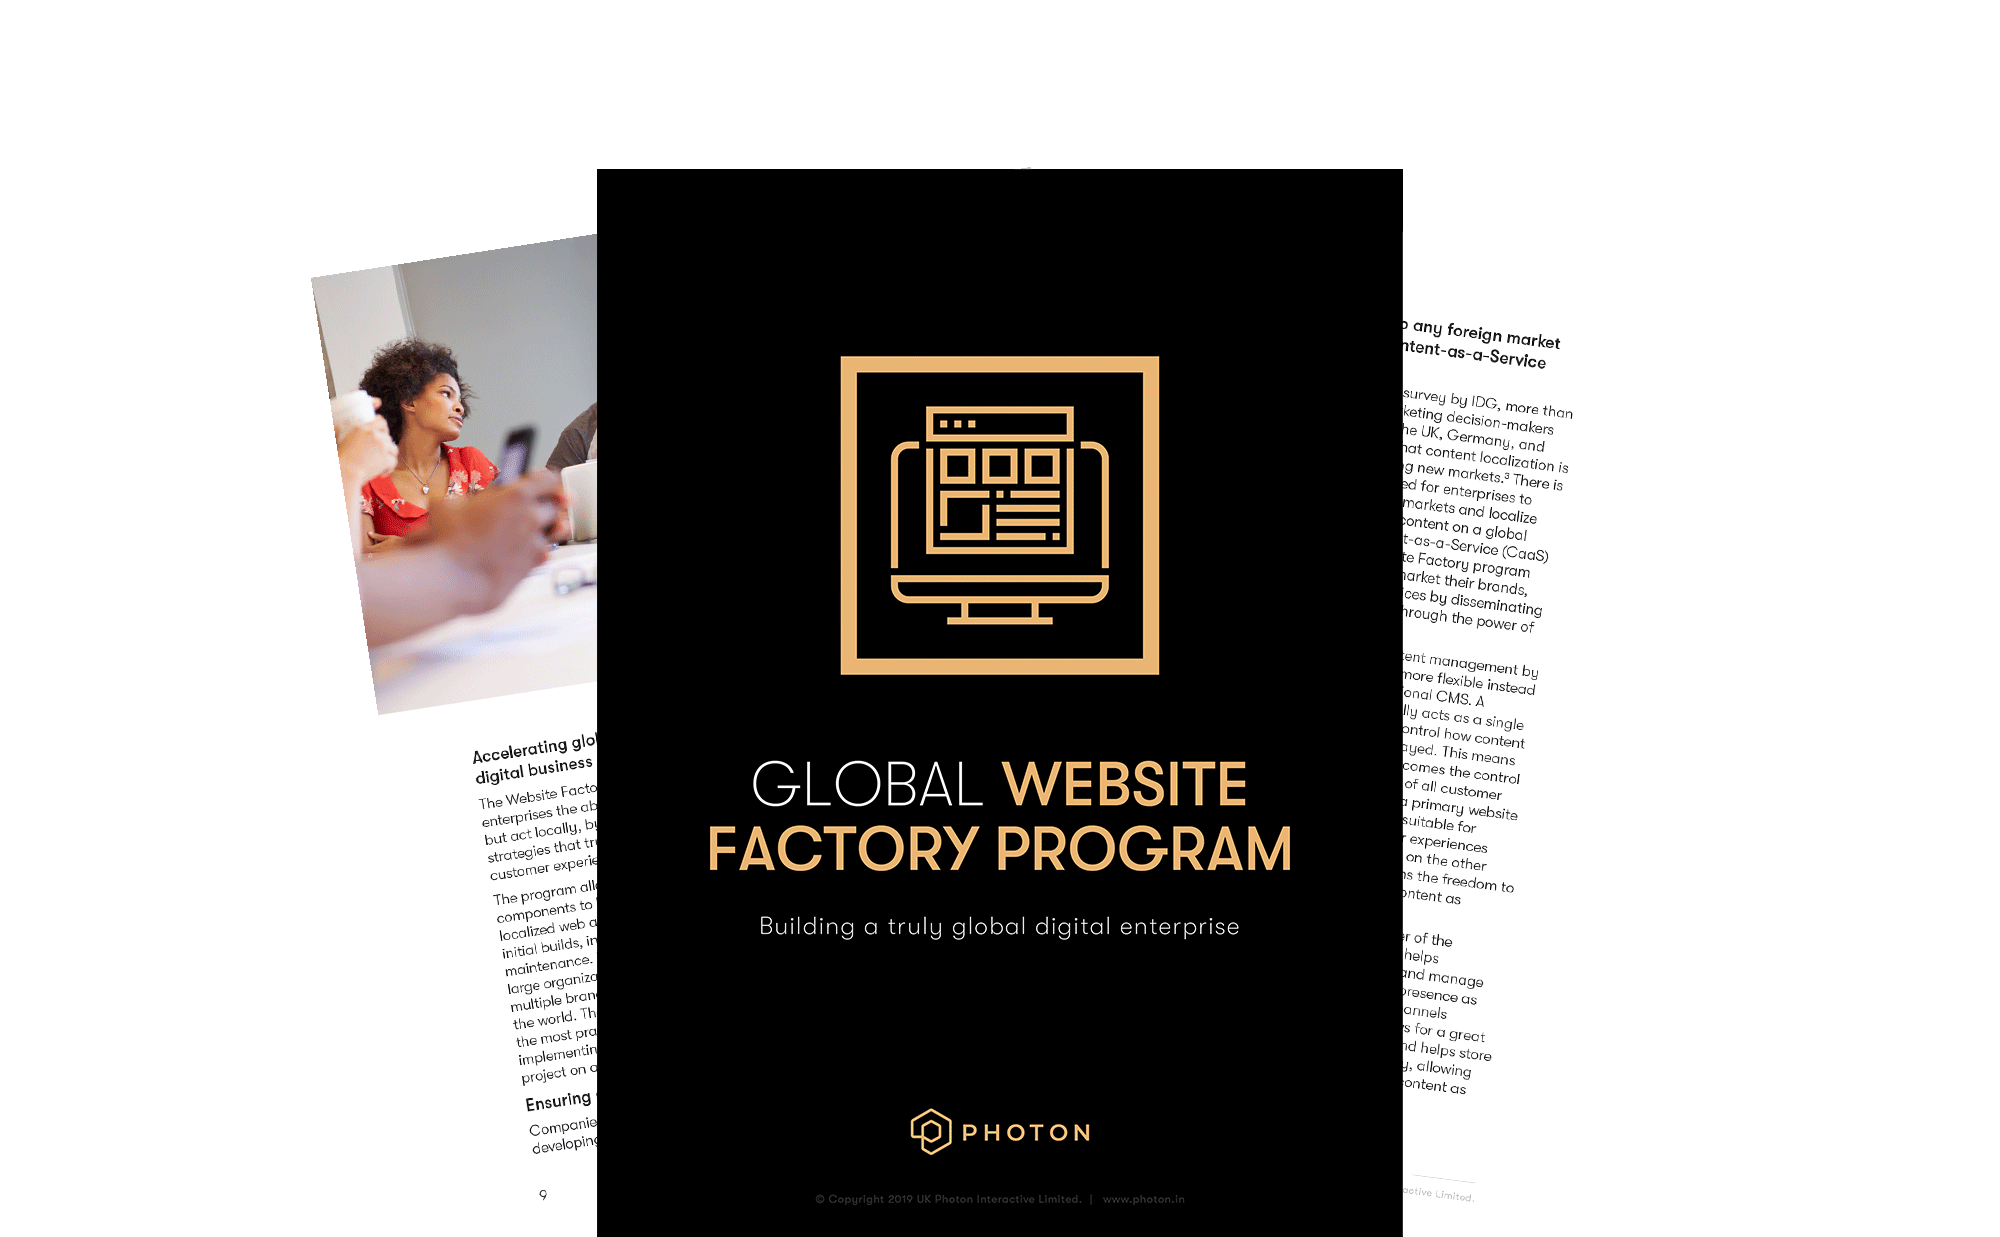 Photon’s Global Website Factory Program